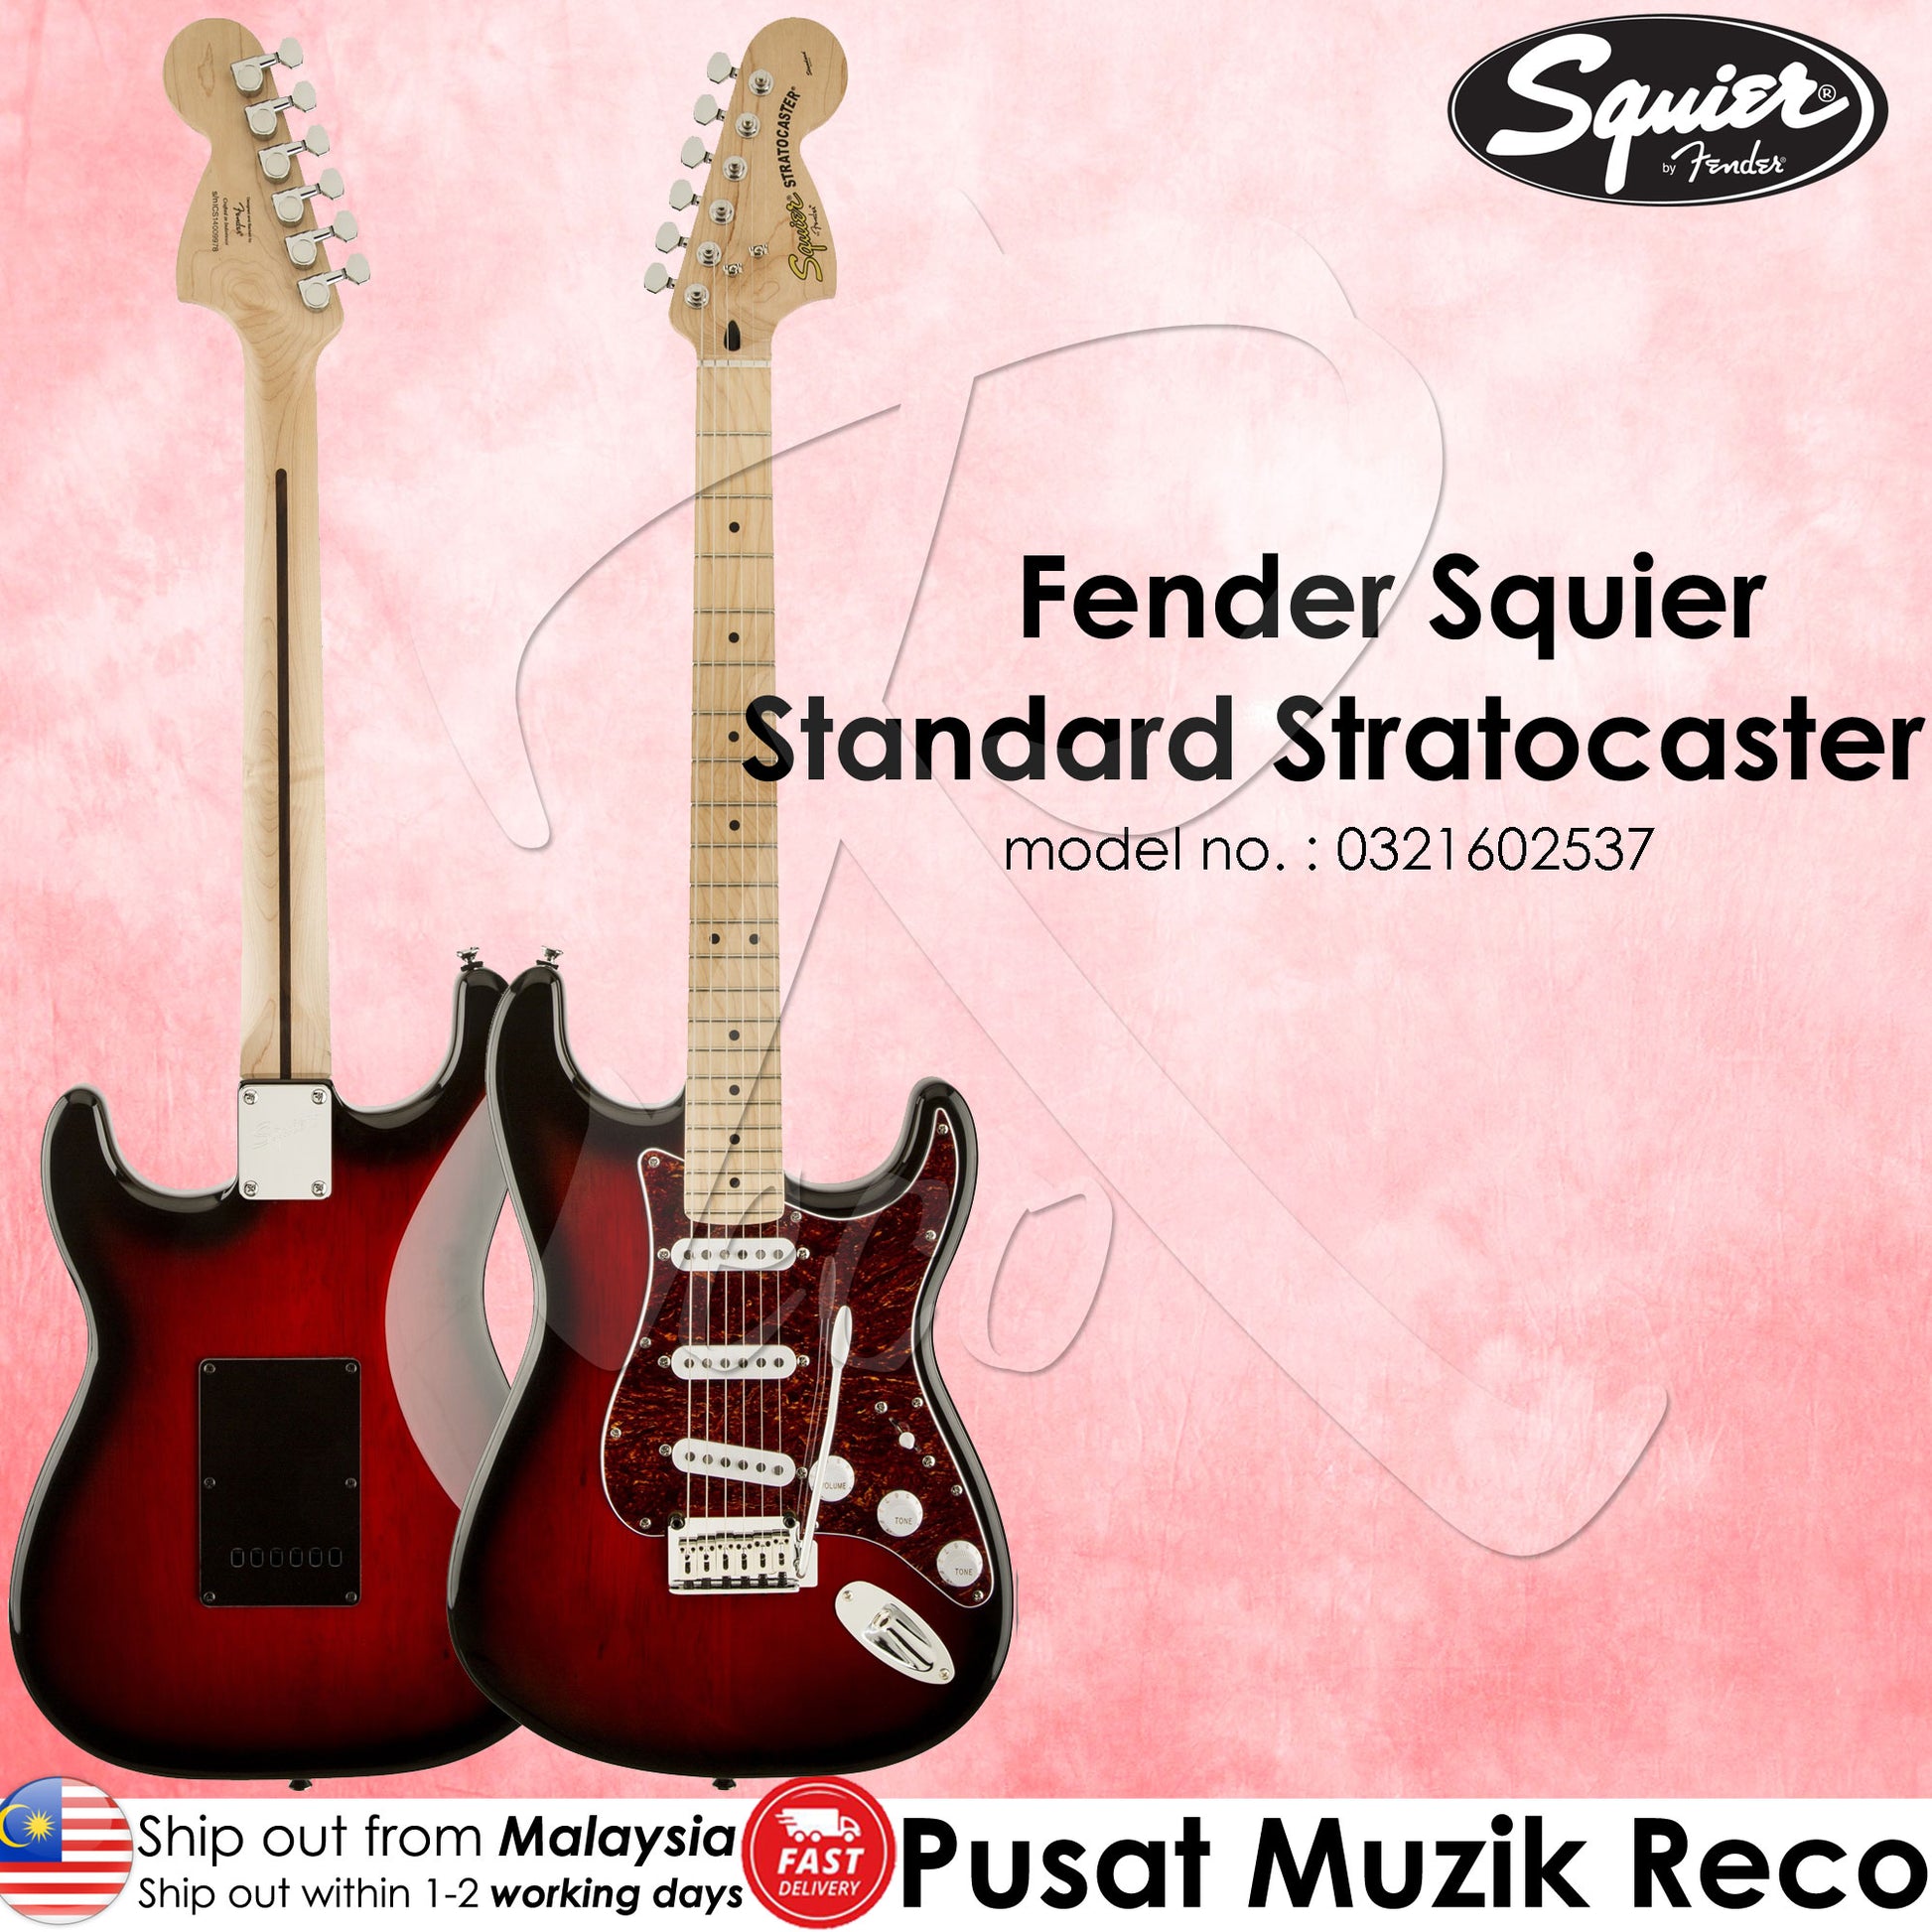 Fender Squier 0321602537 Standard Stratocaster Electric Guitar - Antique Burst - Reco Music Malaysia